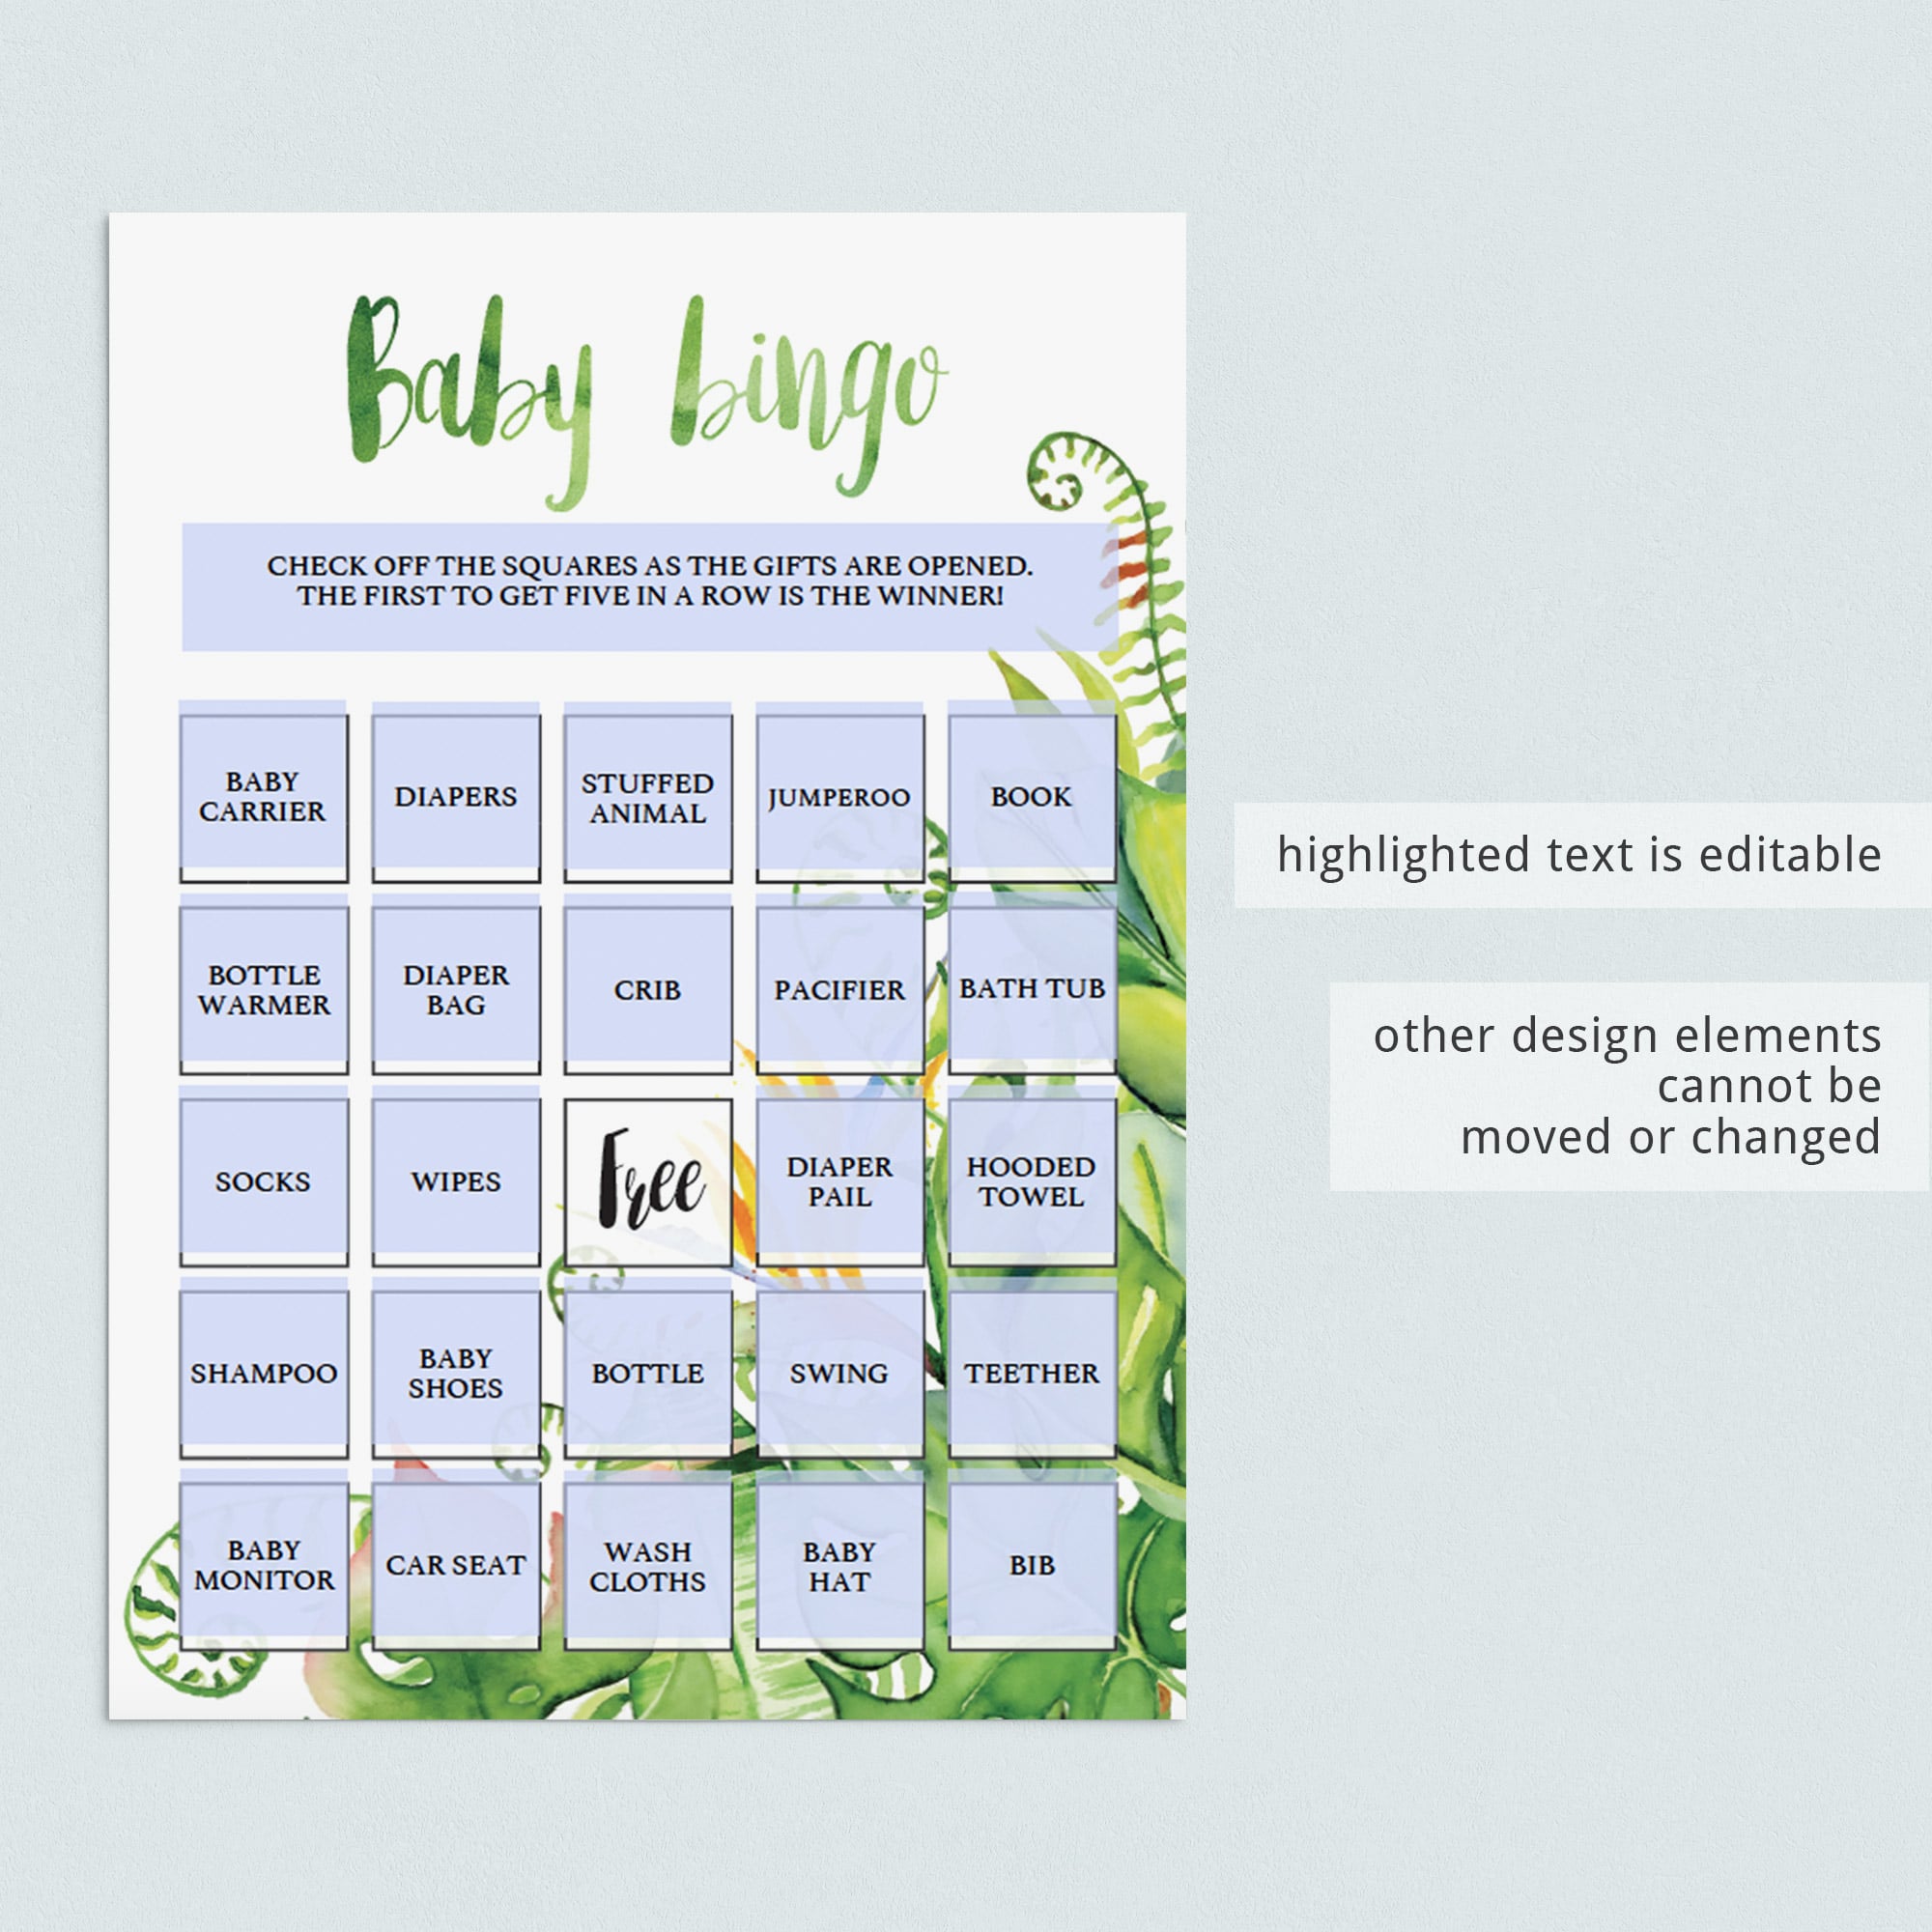 Editable baby bingo cards template by LittleSizzle